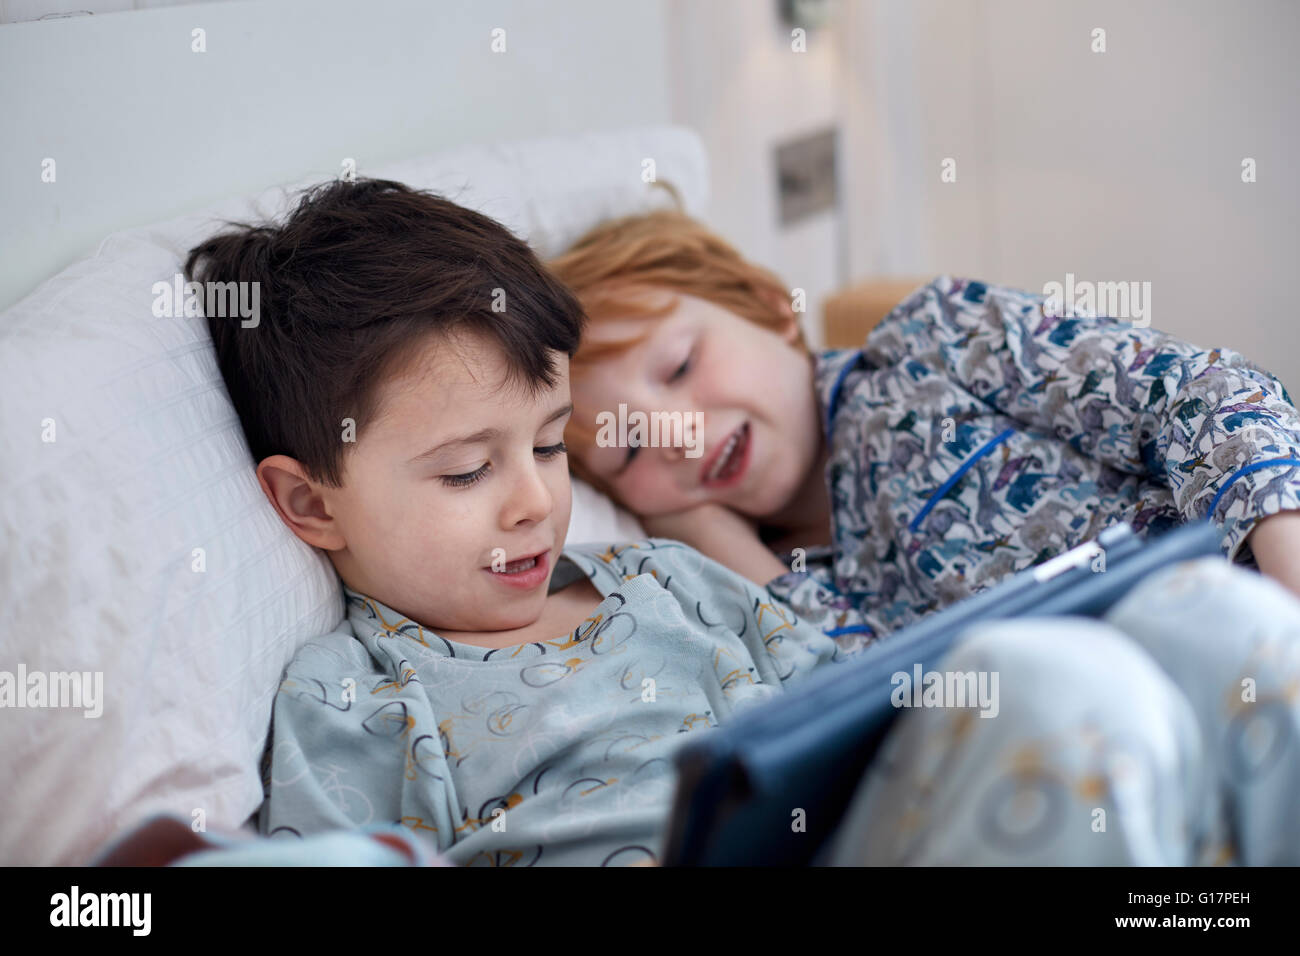 Boys in pyjamas using digital tablet in bed Stock Photo